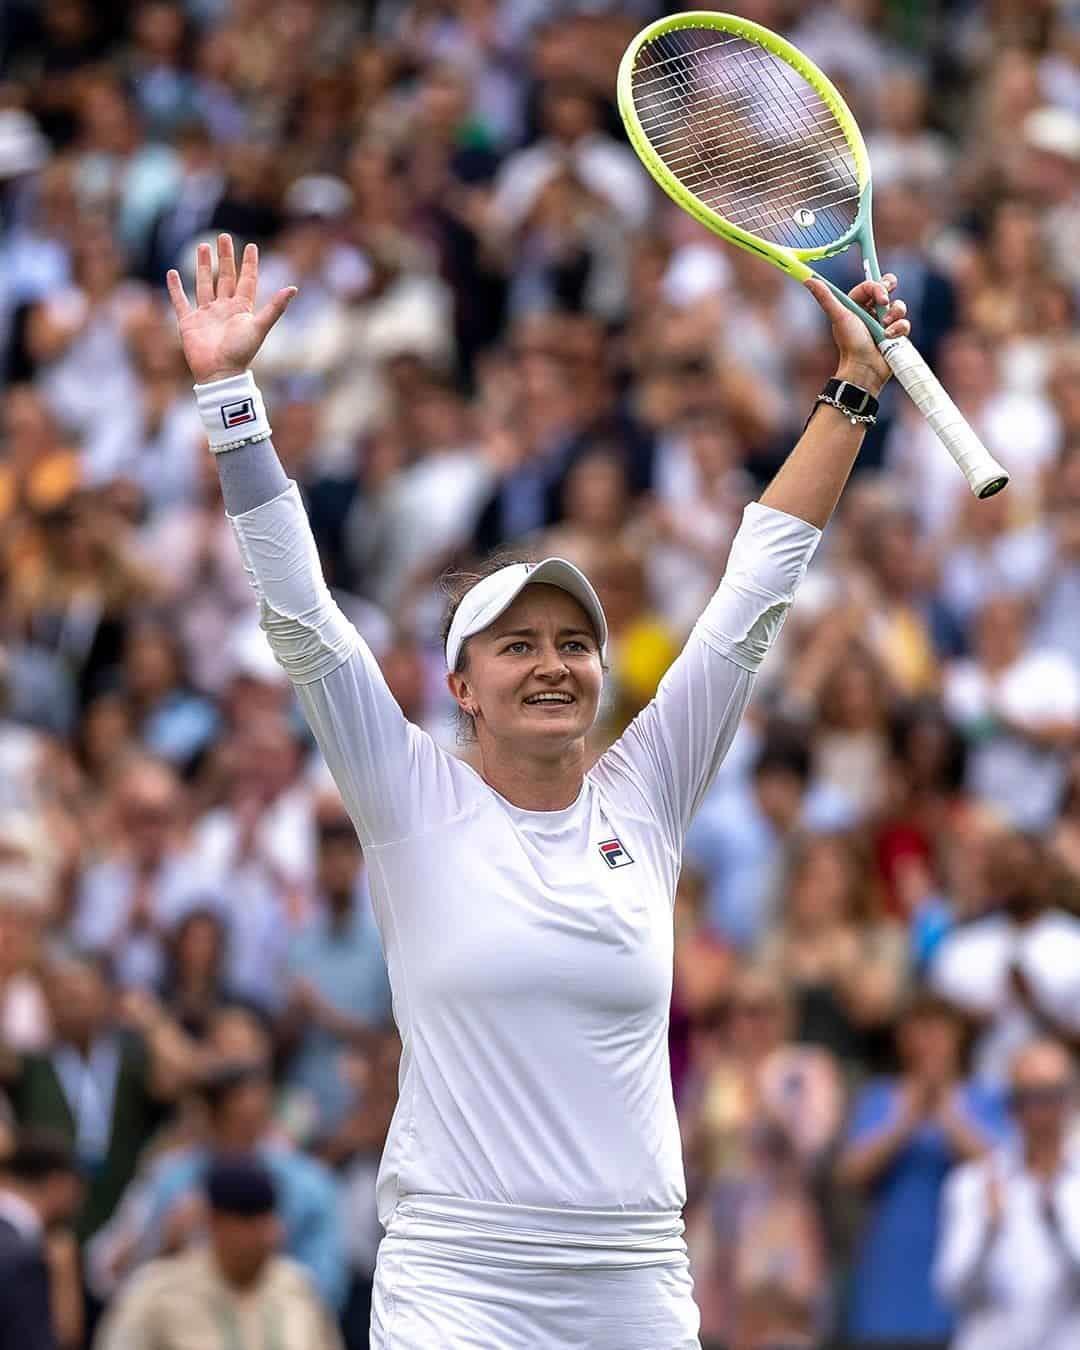 Habrá final inédita en la rama femenil del Wimbledon